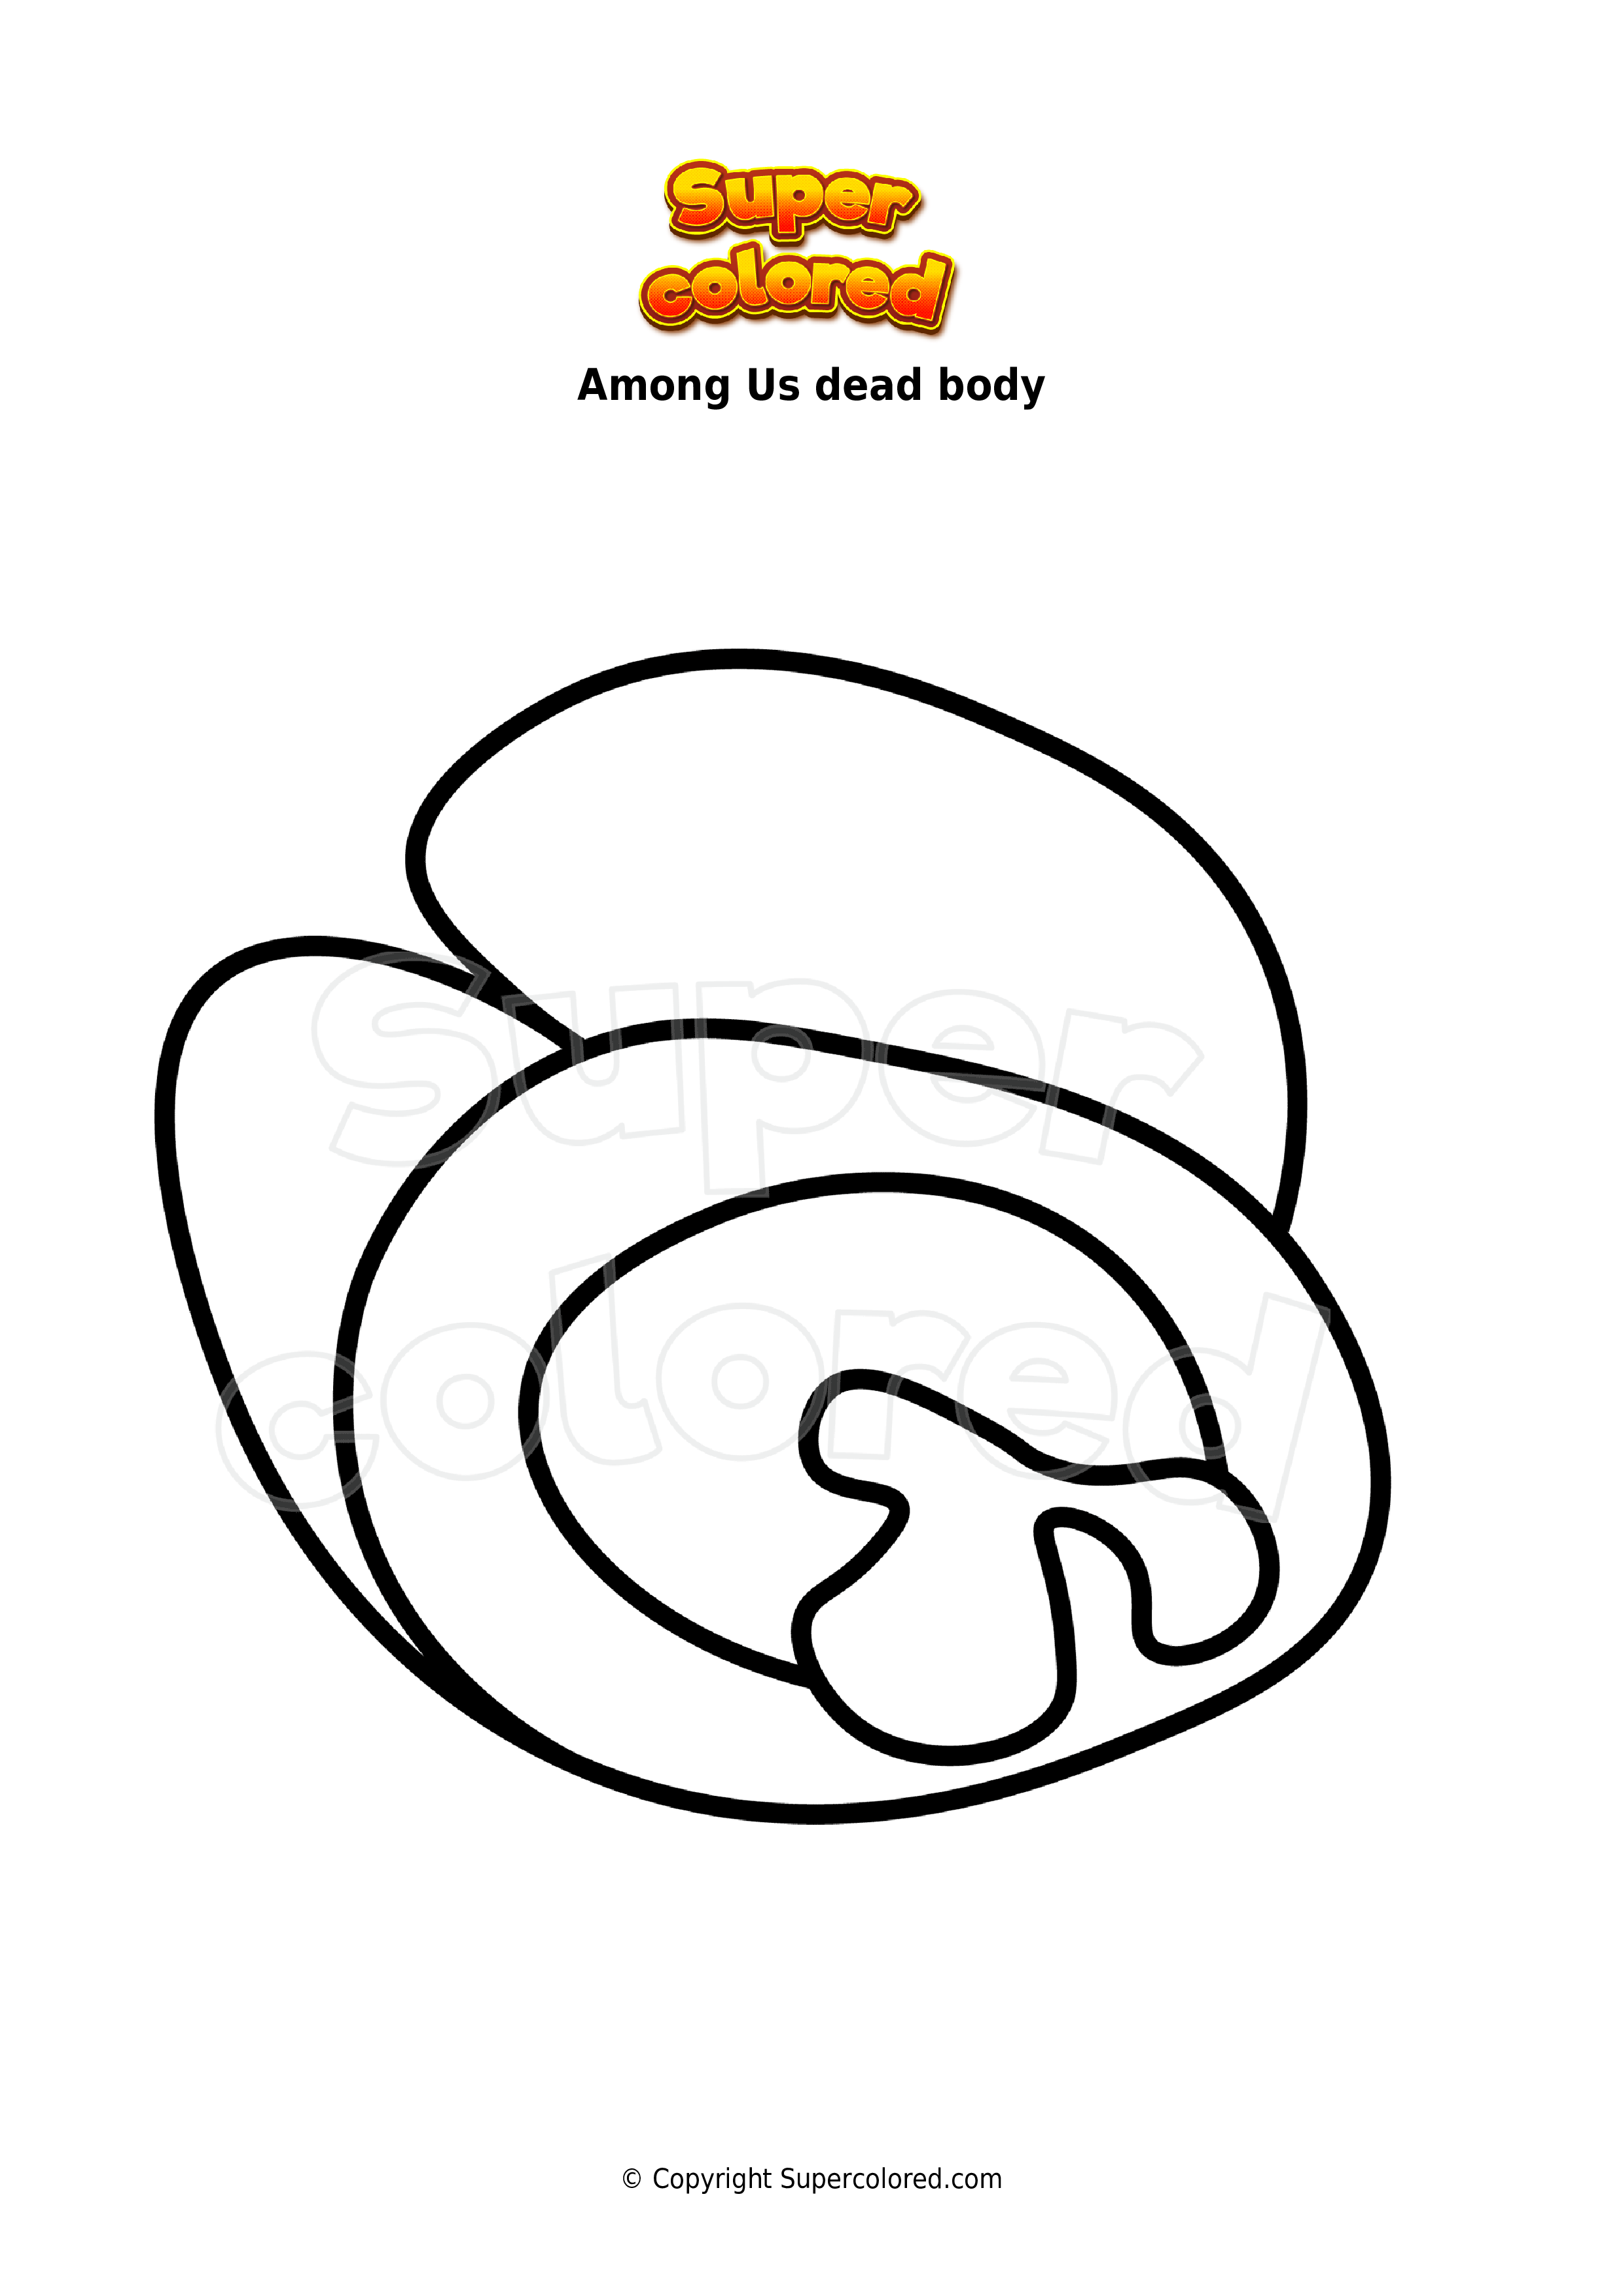 Ausmalbild Among Us dead body - Supercolored.com